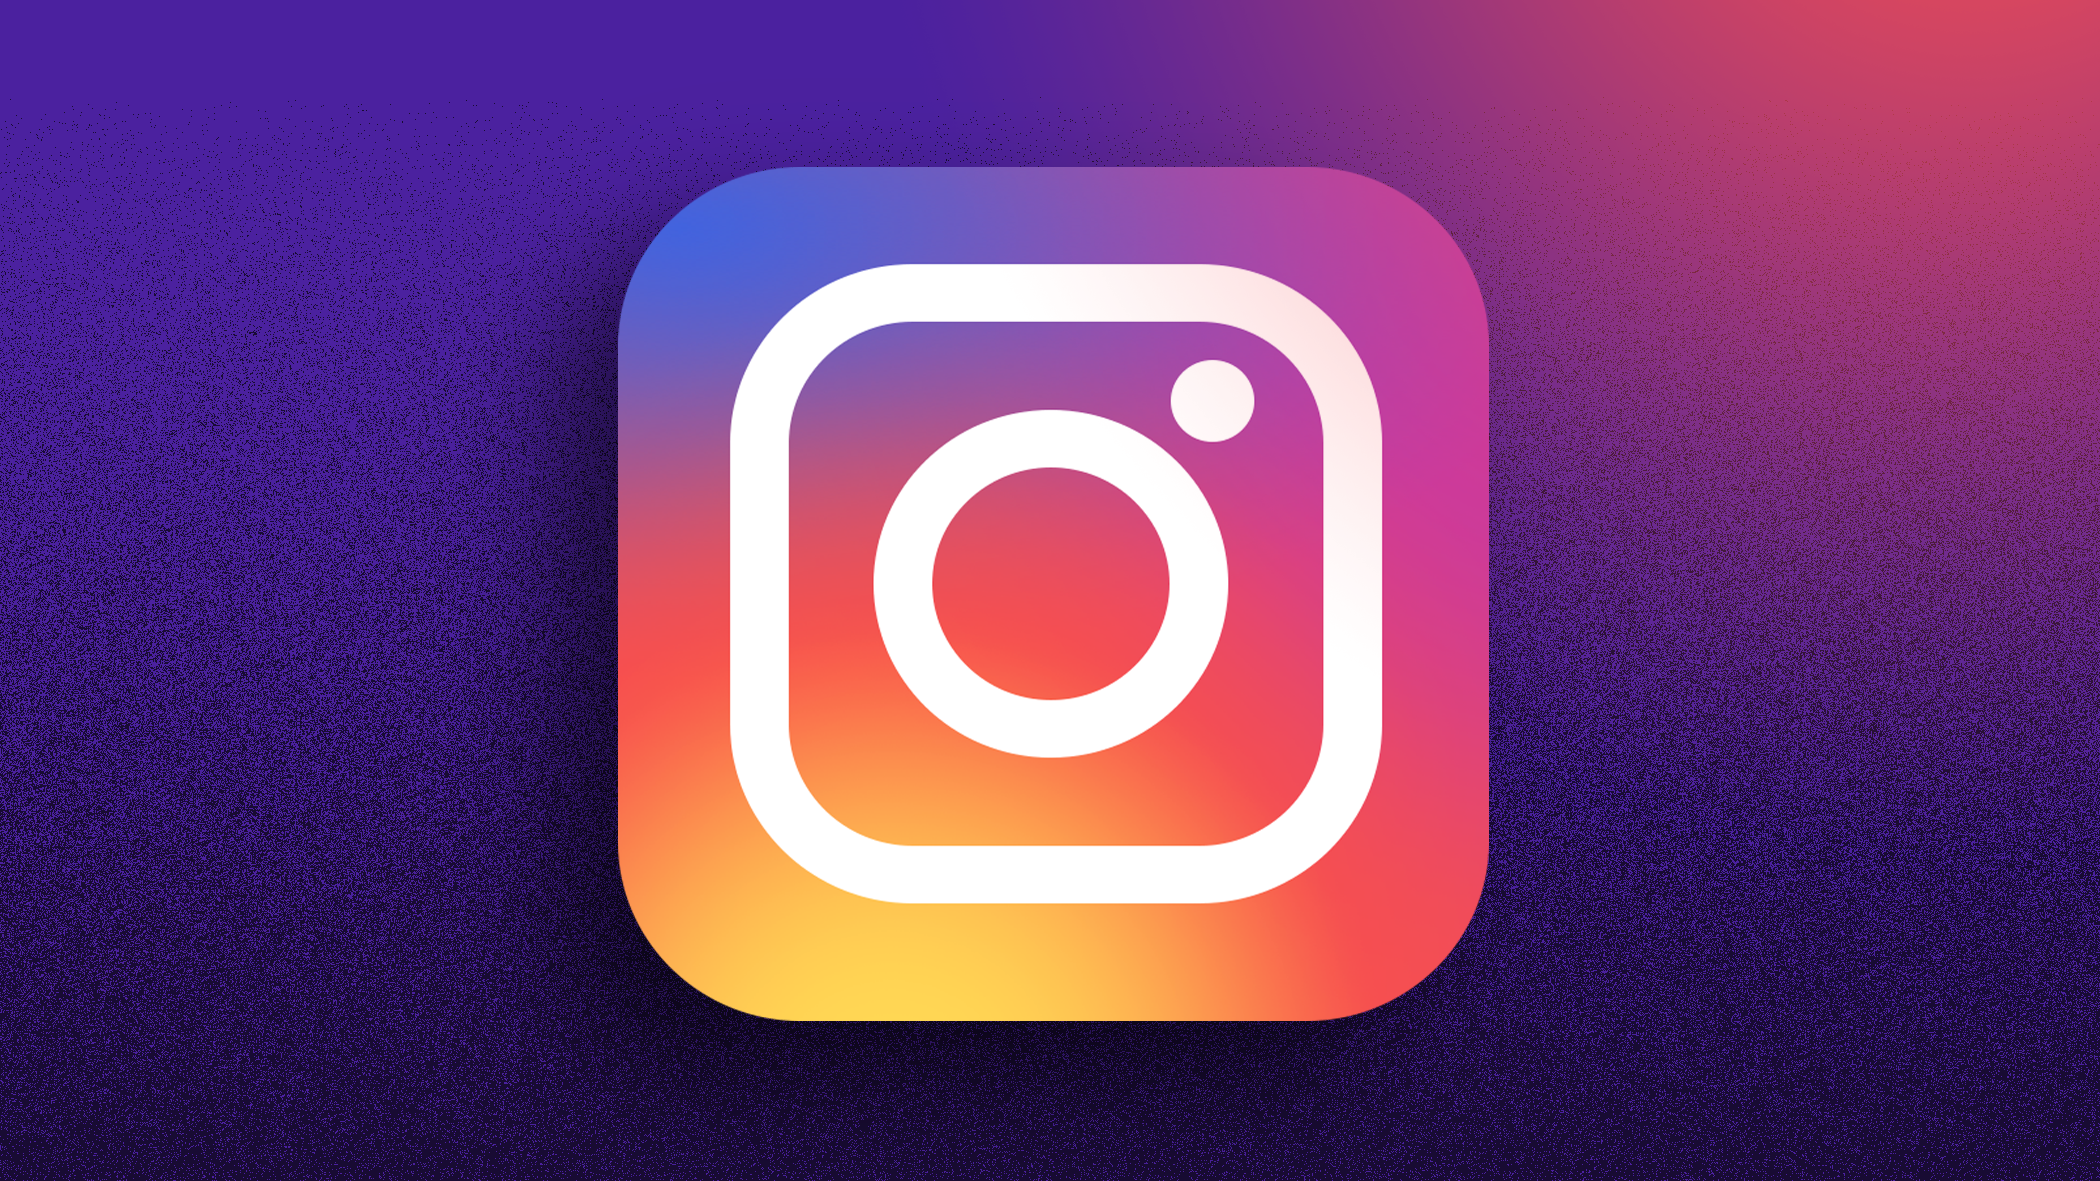 Instagram logo on a purple background